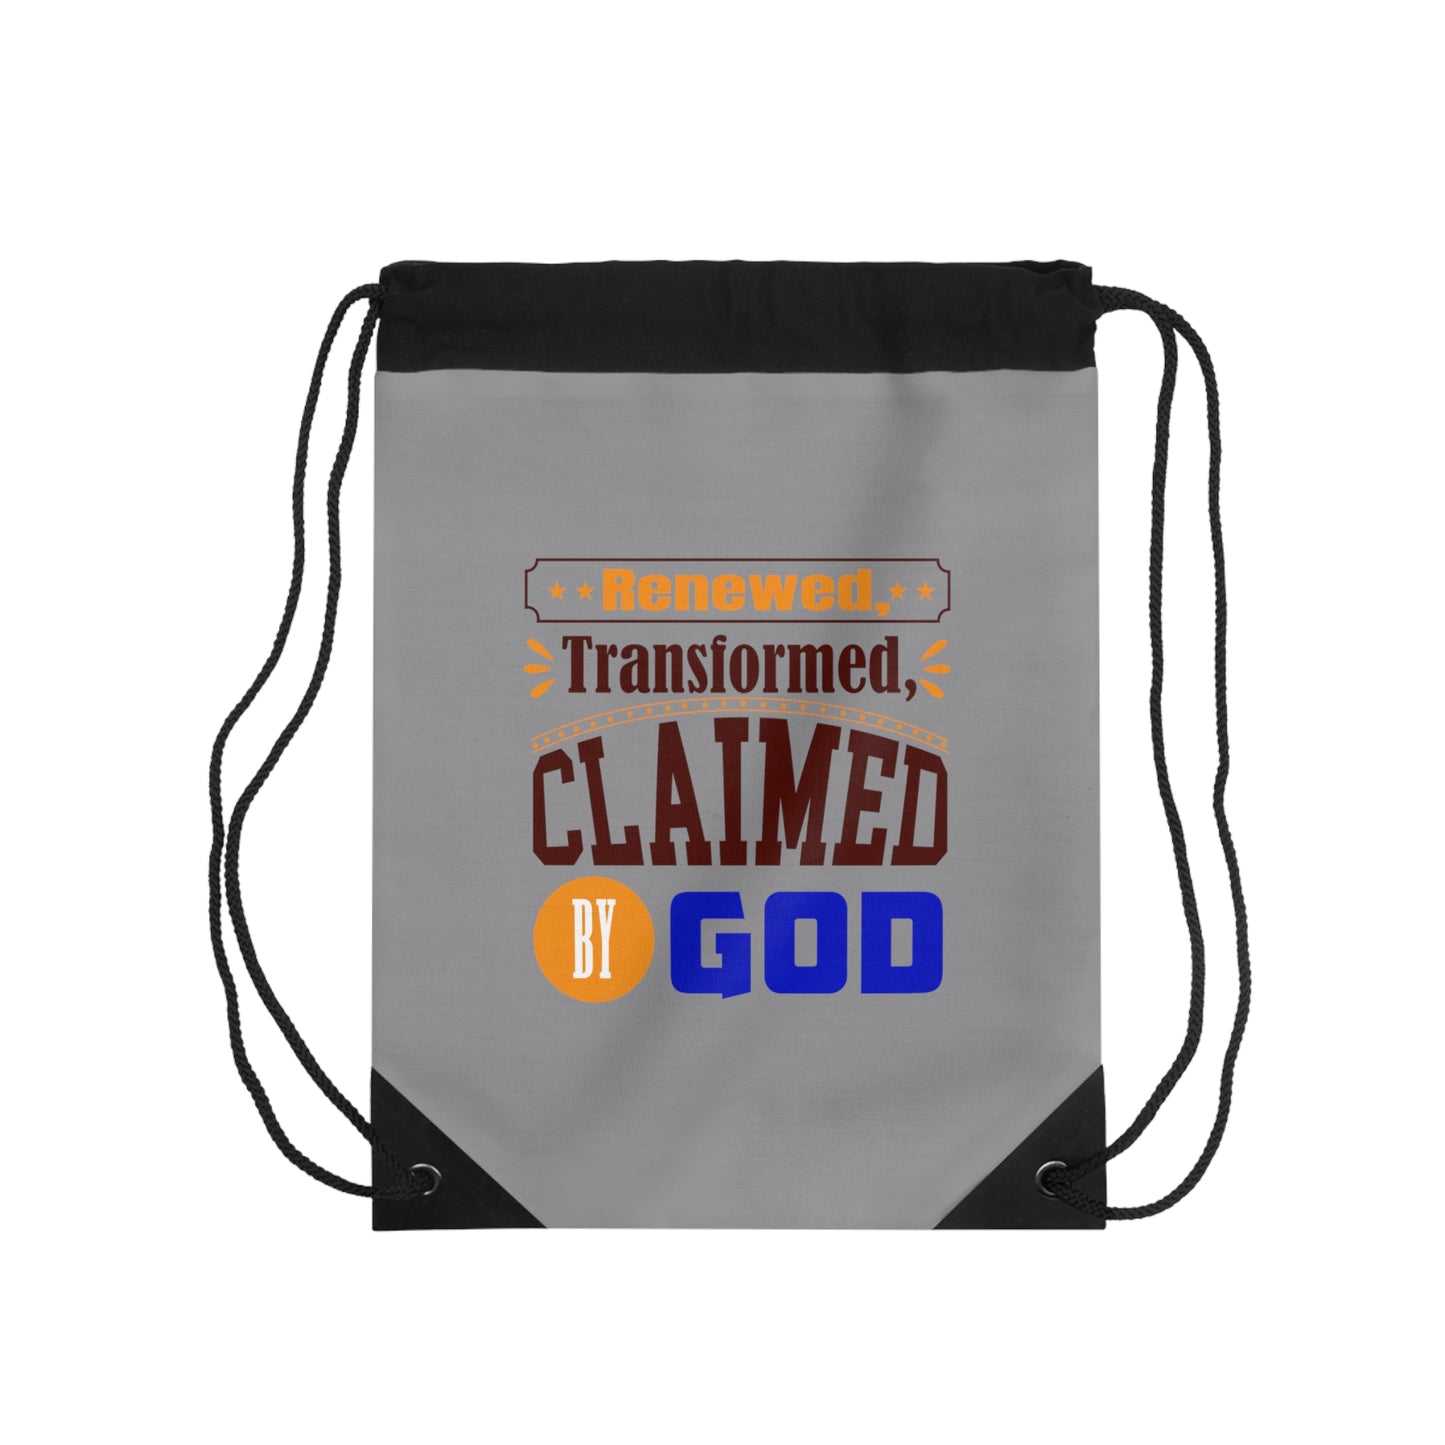 Renewed, Transformed, Claimed By God Drawstring Bag